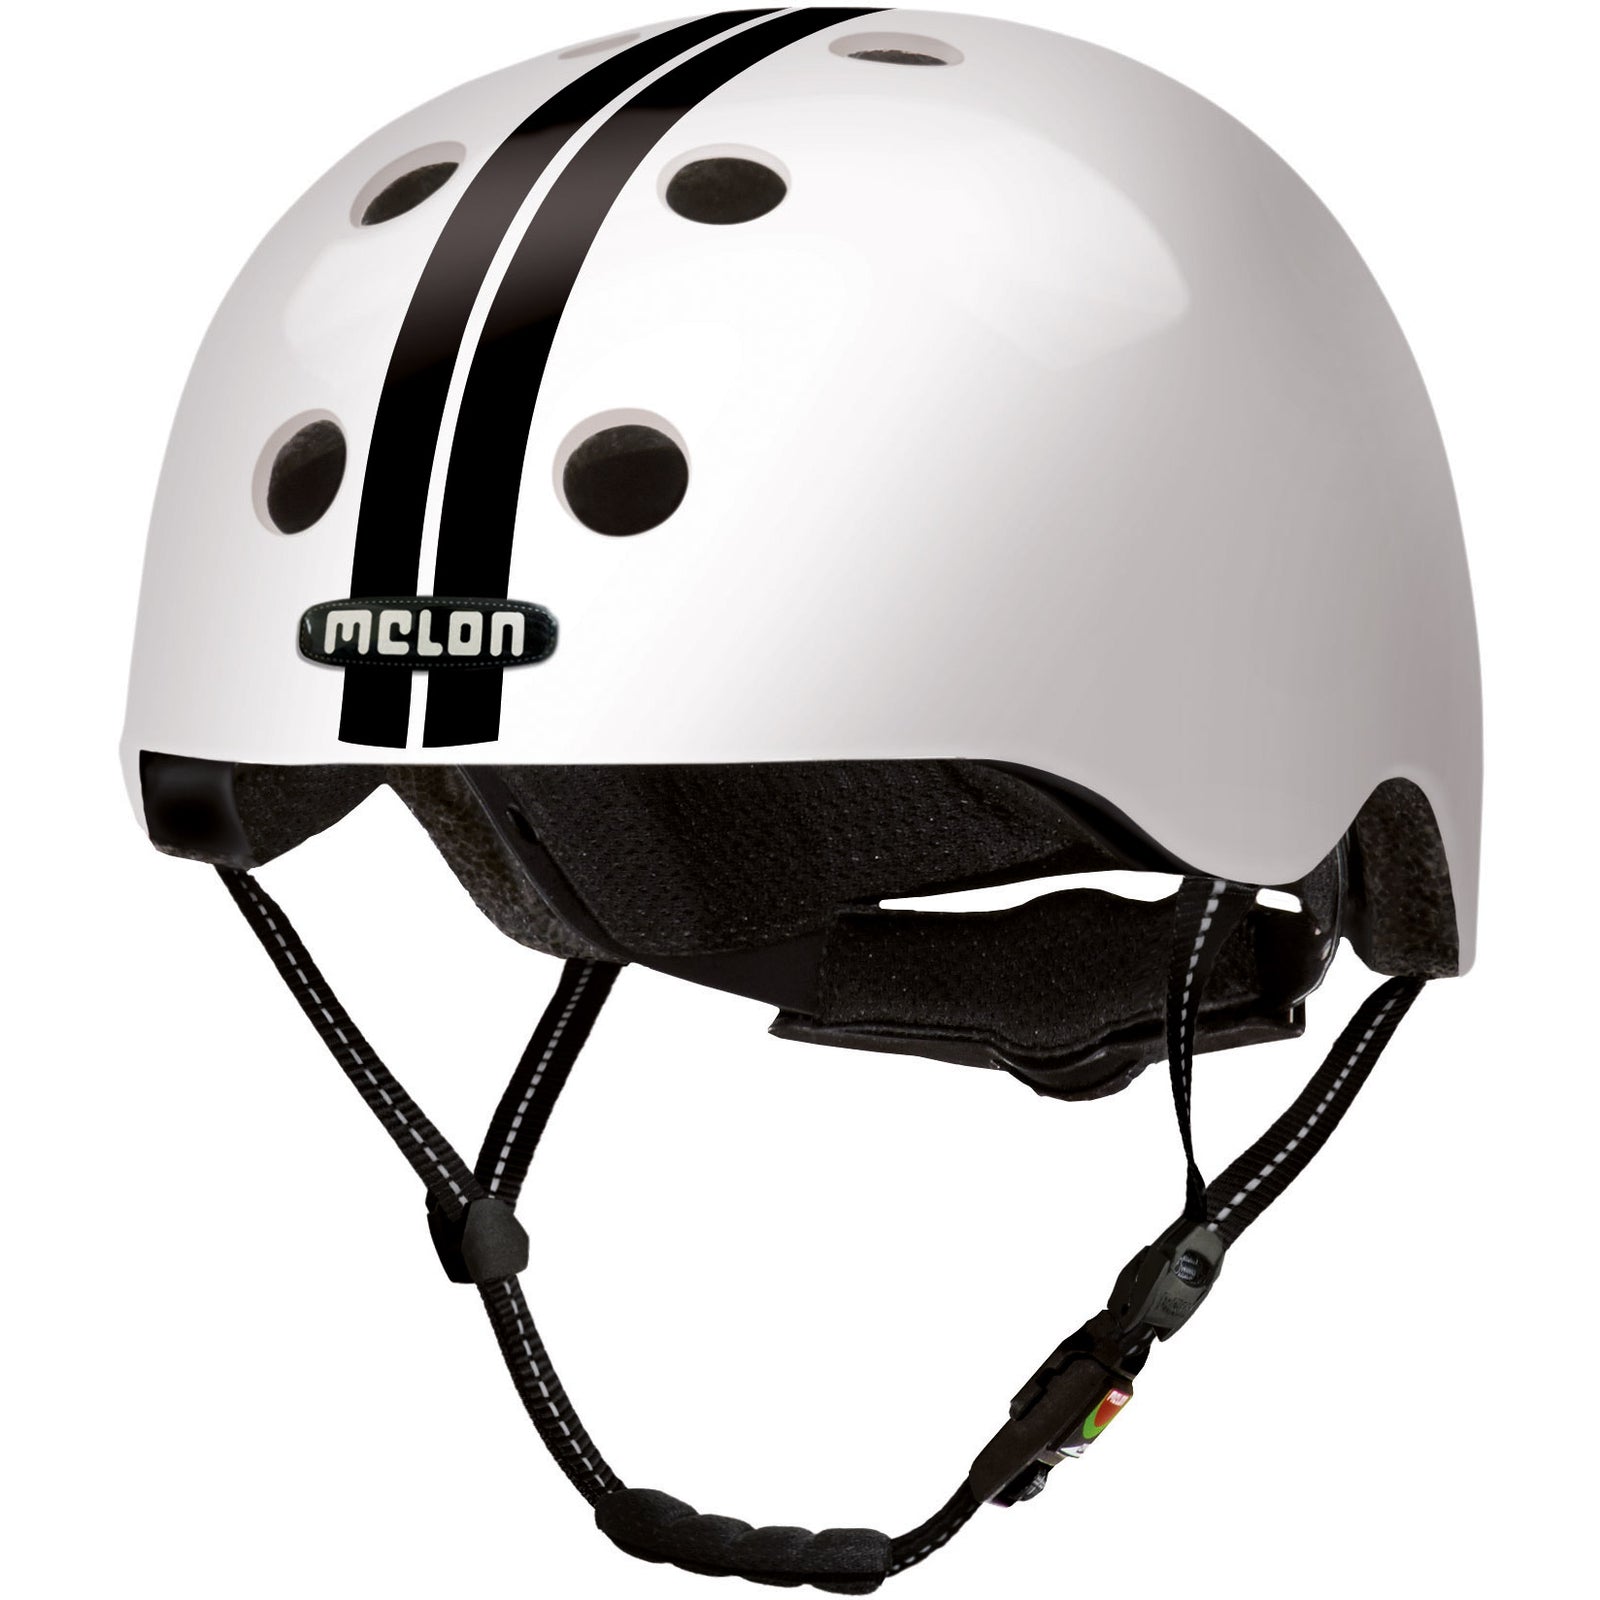 bicycle helmet urban active polycarbonate white/black size 58-63 cm